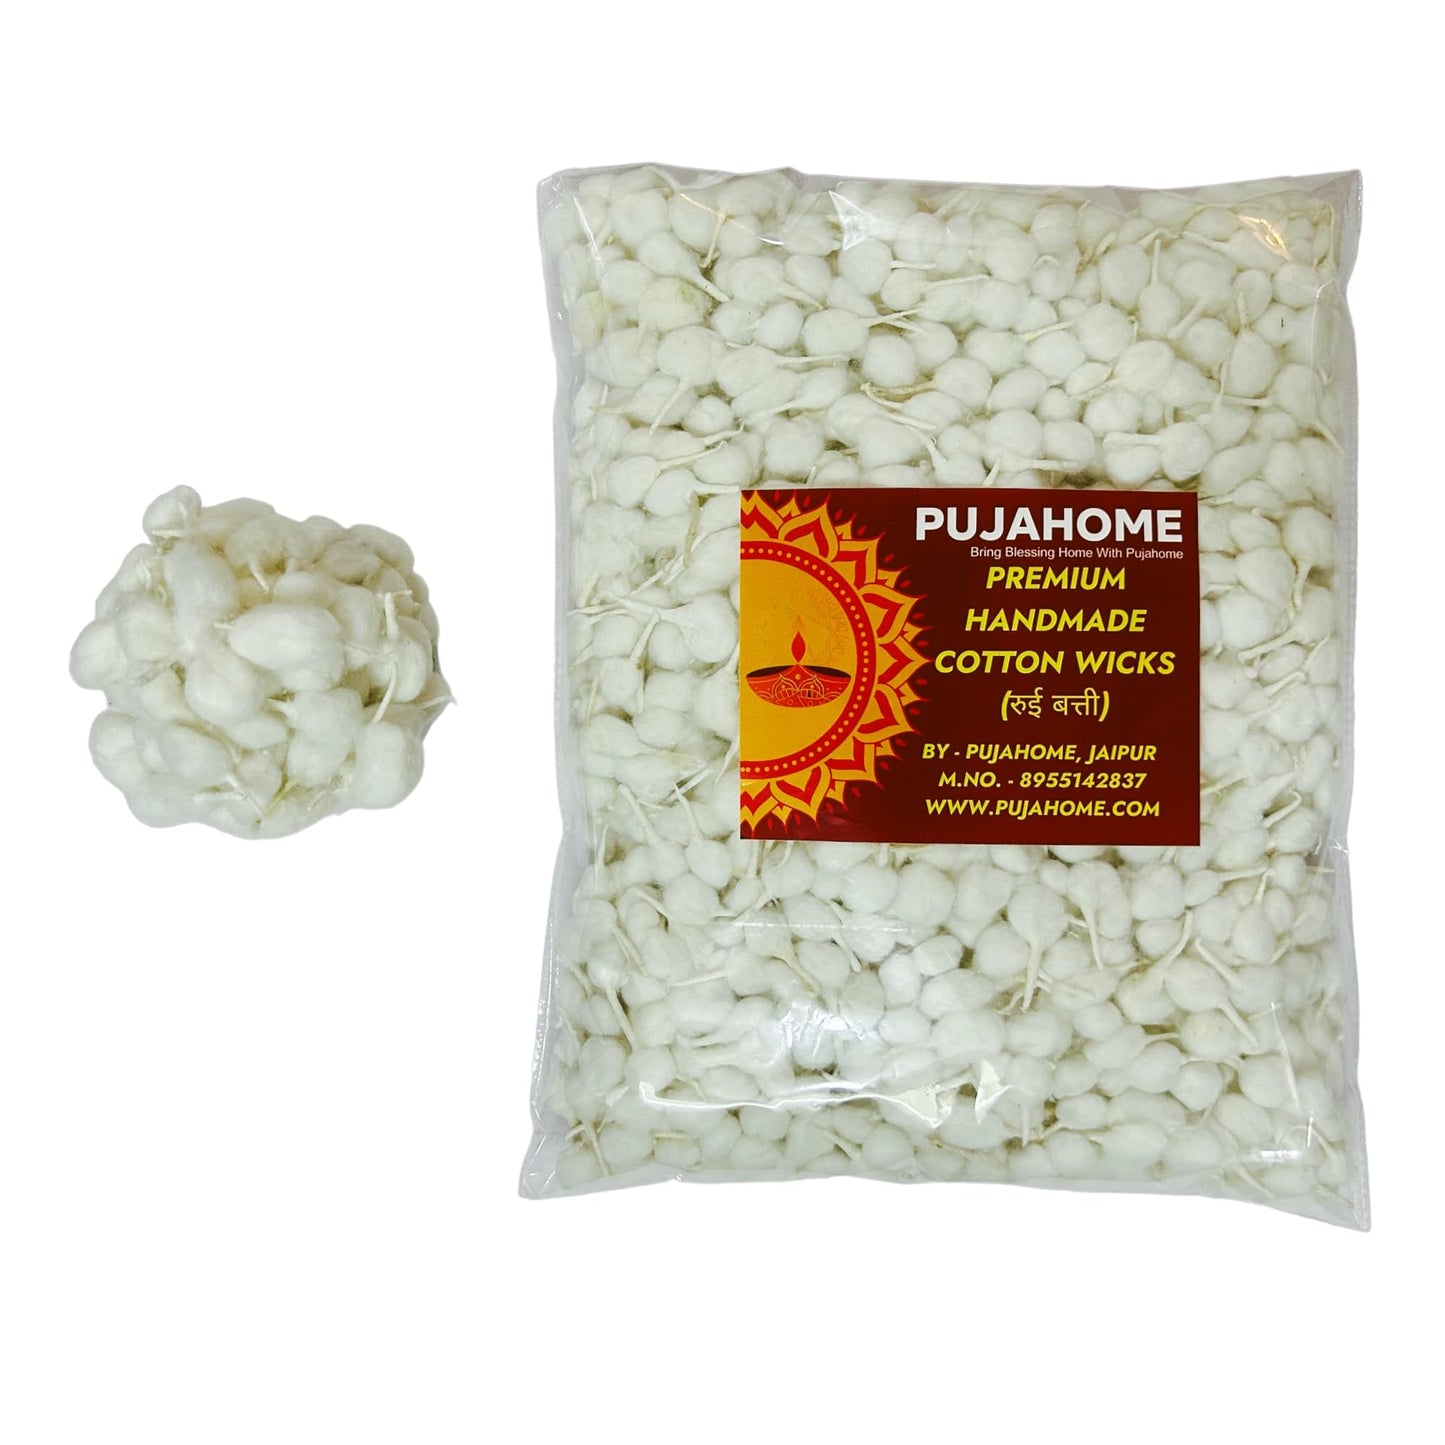 Pujahome Premium Round Cotton Wicks (GOL Batti) for Diya - 500 Pieces, Ideal for Puja & Rituals (White)